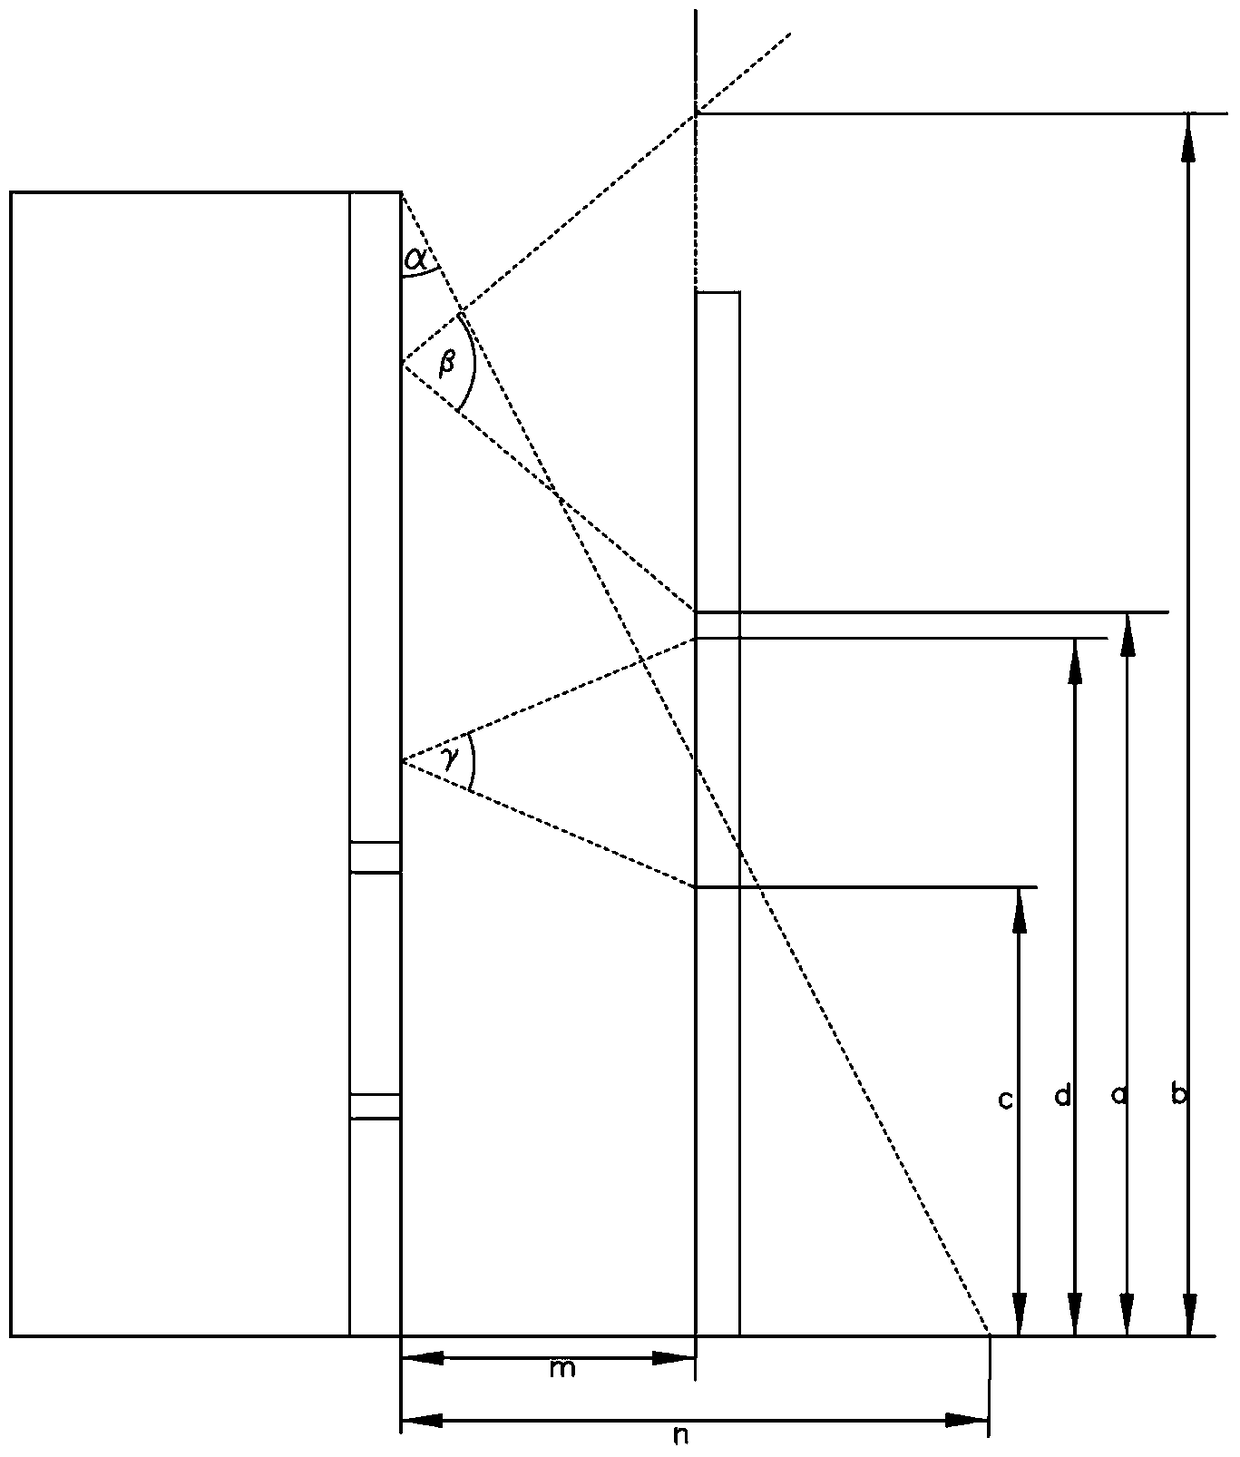 Refrigerator with non-touch door opening and door opening control method